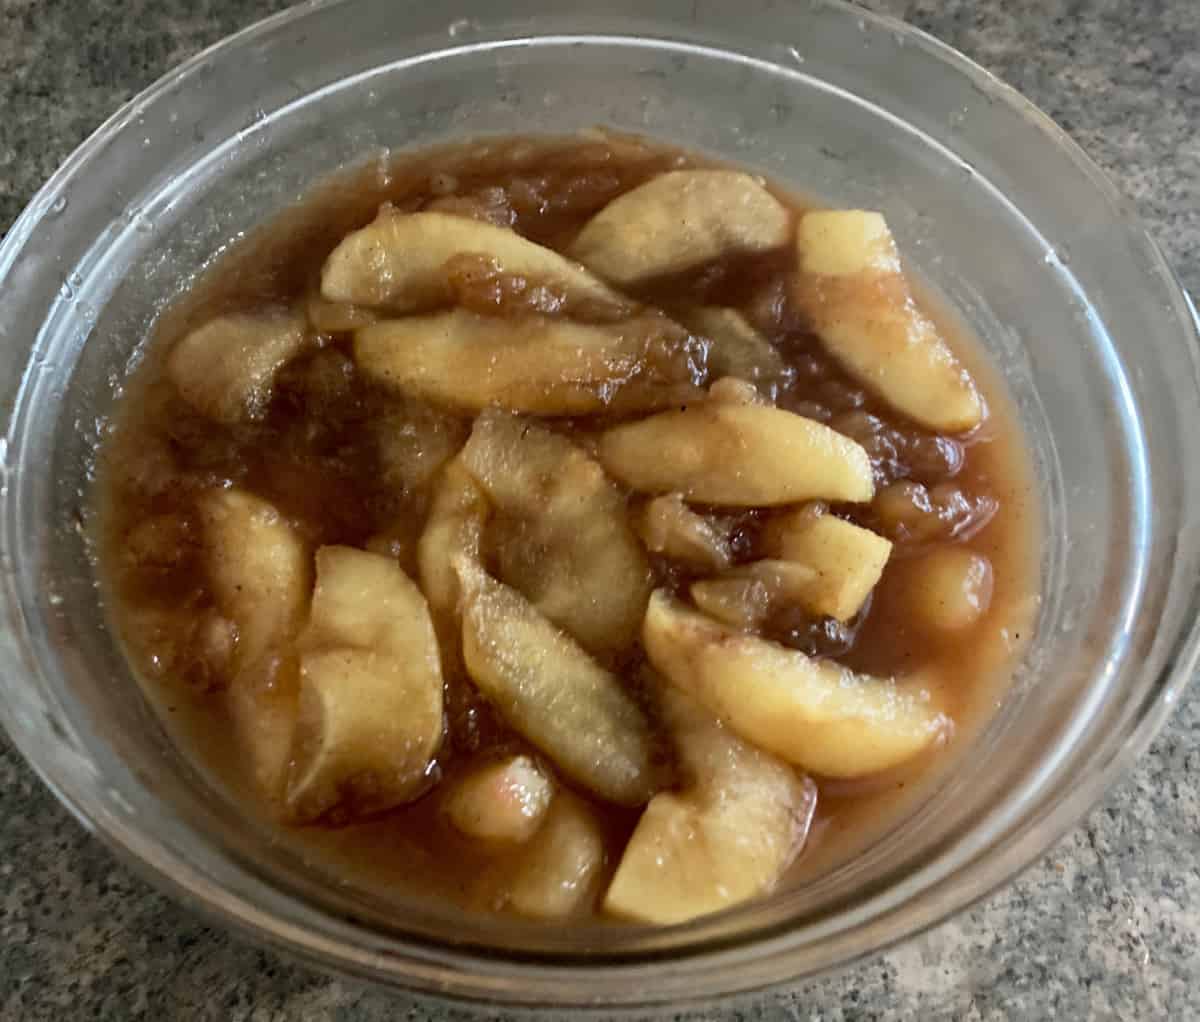 Cinnamon Apple Stir-Fry in glass bowl on counter.